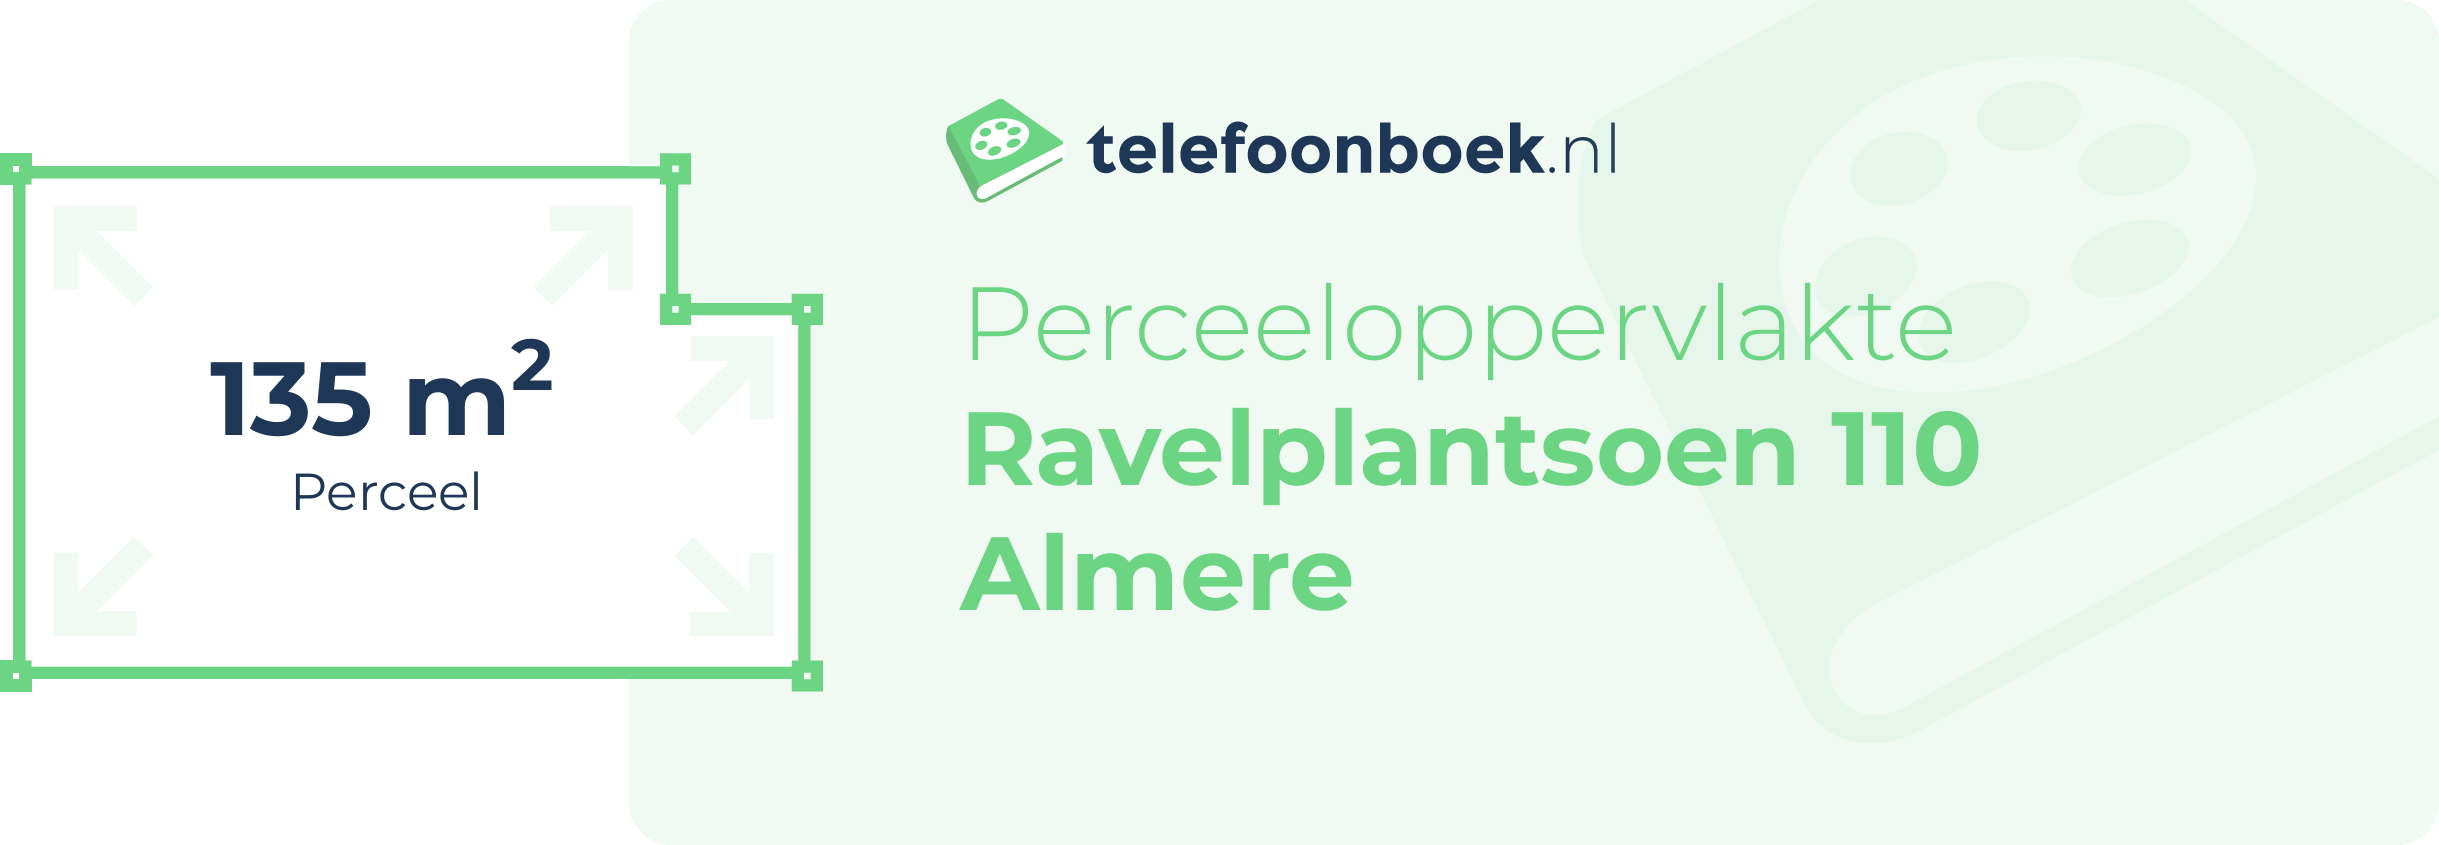 Perceeloppervlakte Ravelplantsoen 110 Almere